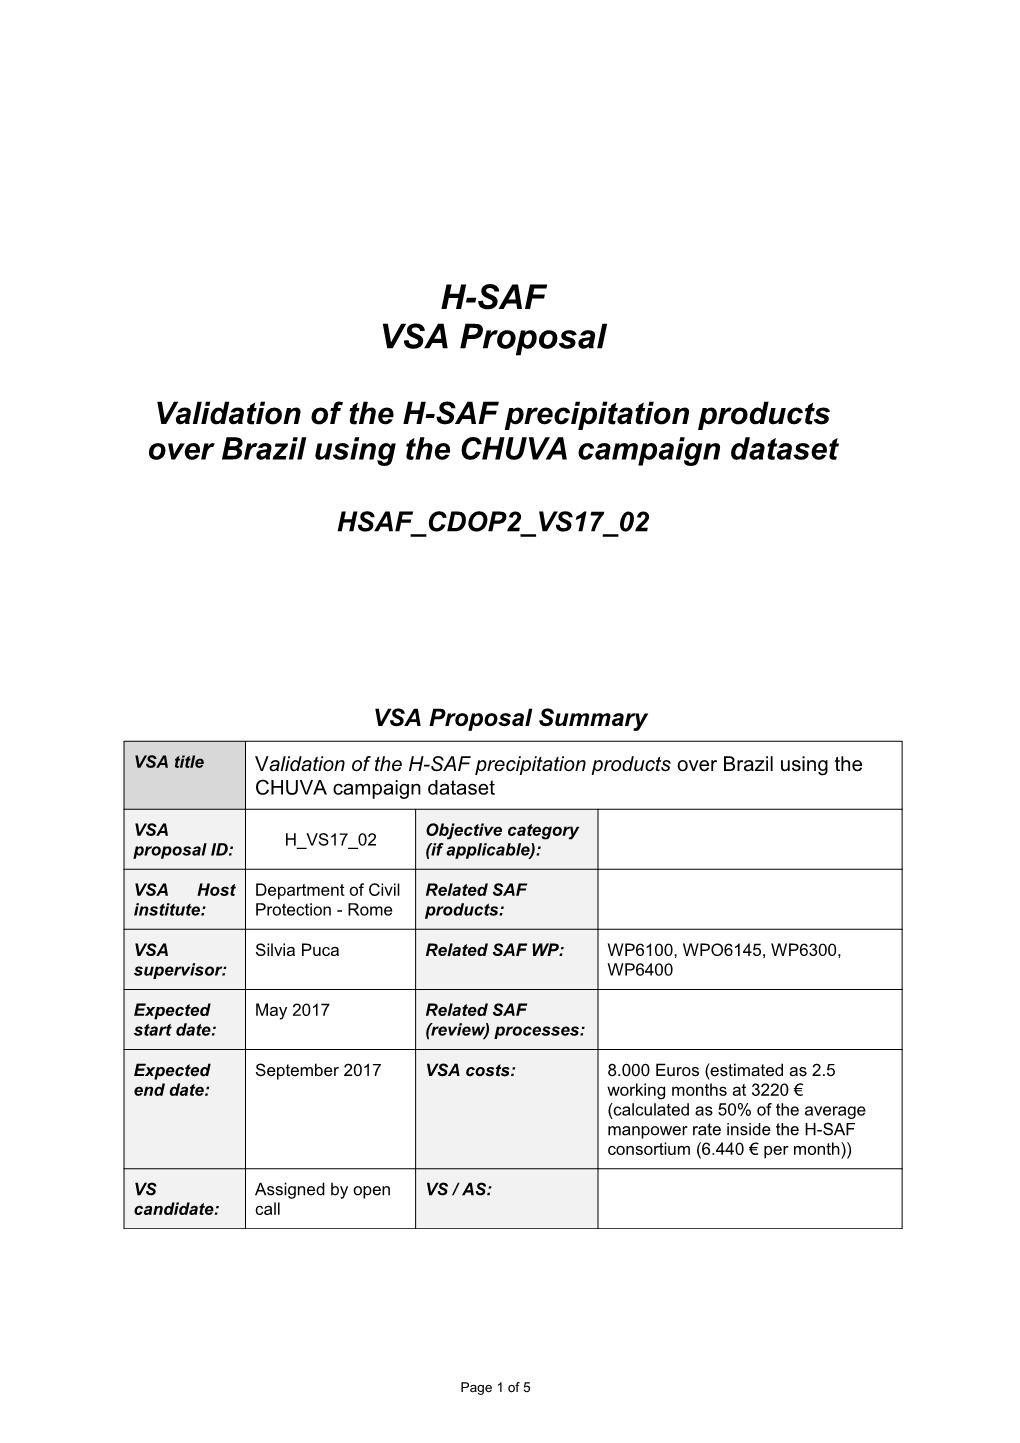 VSA Proposal Summary